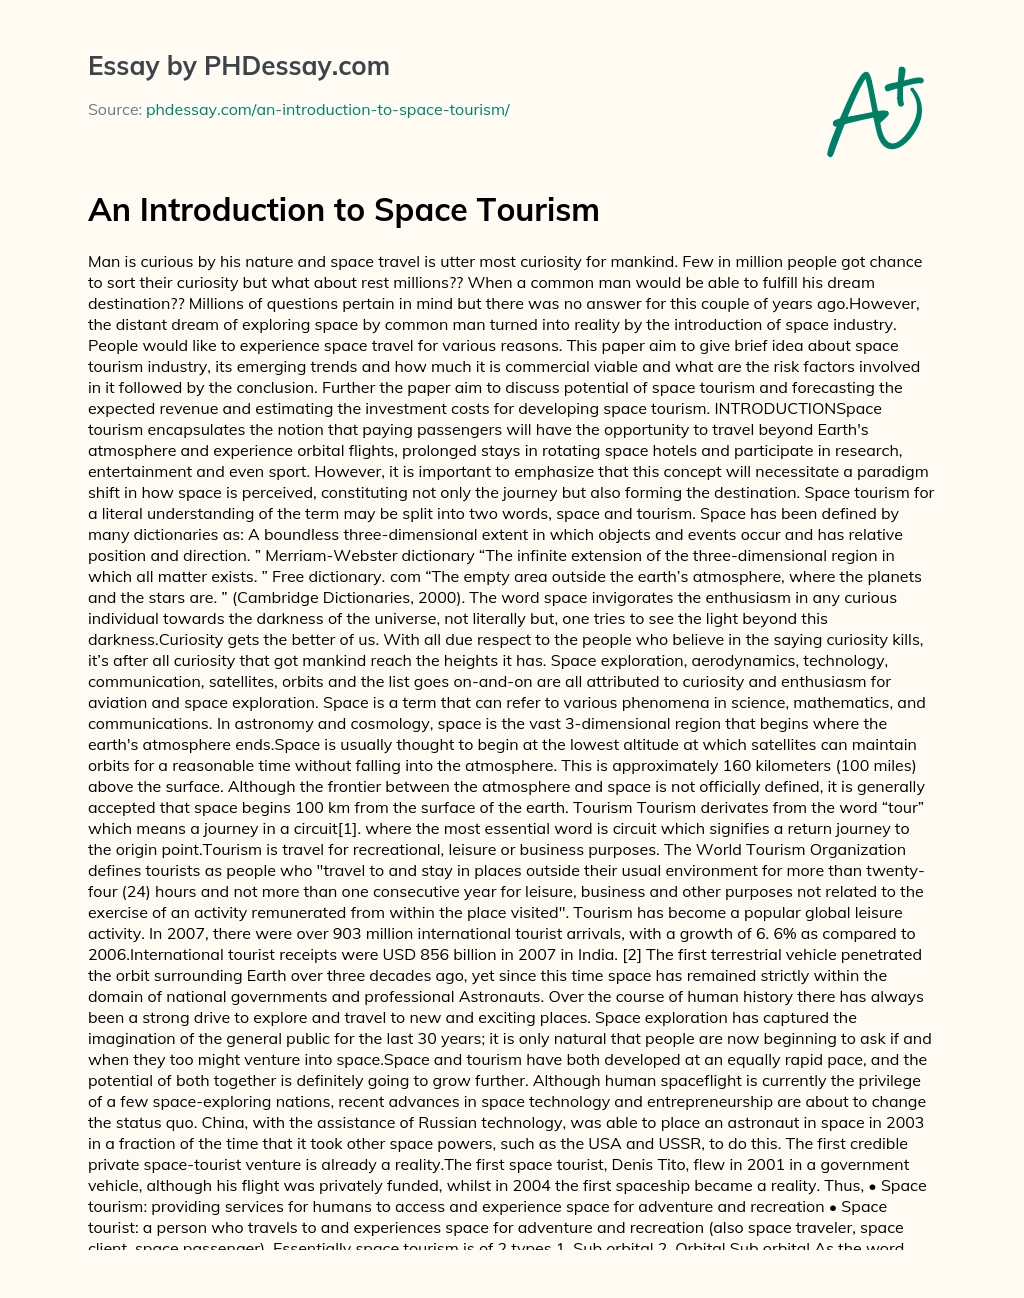 speech on space tourism